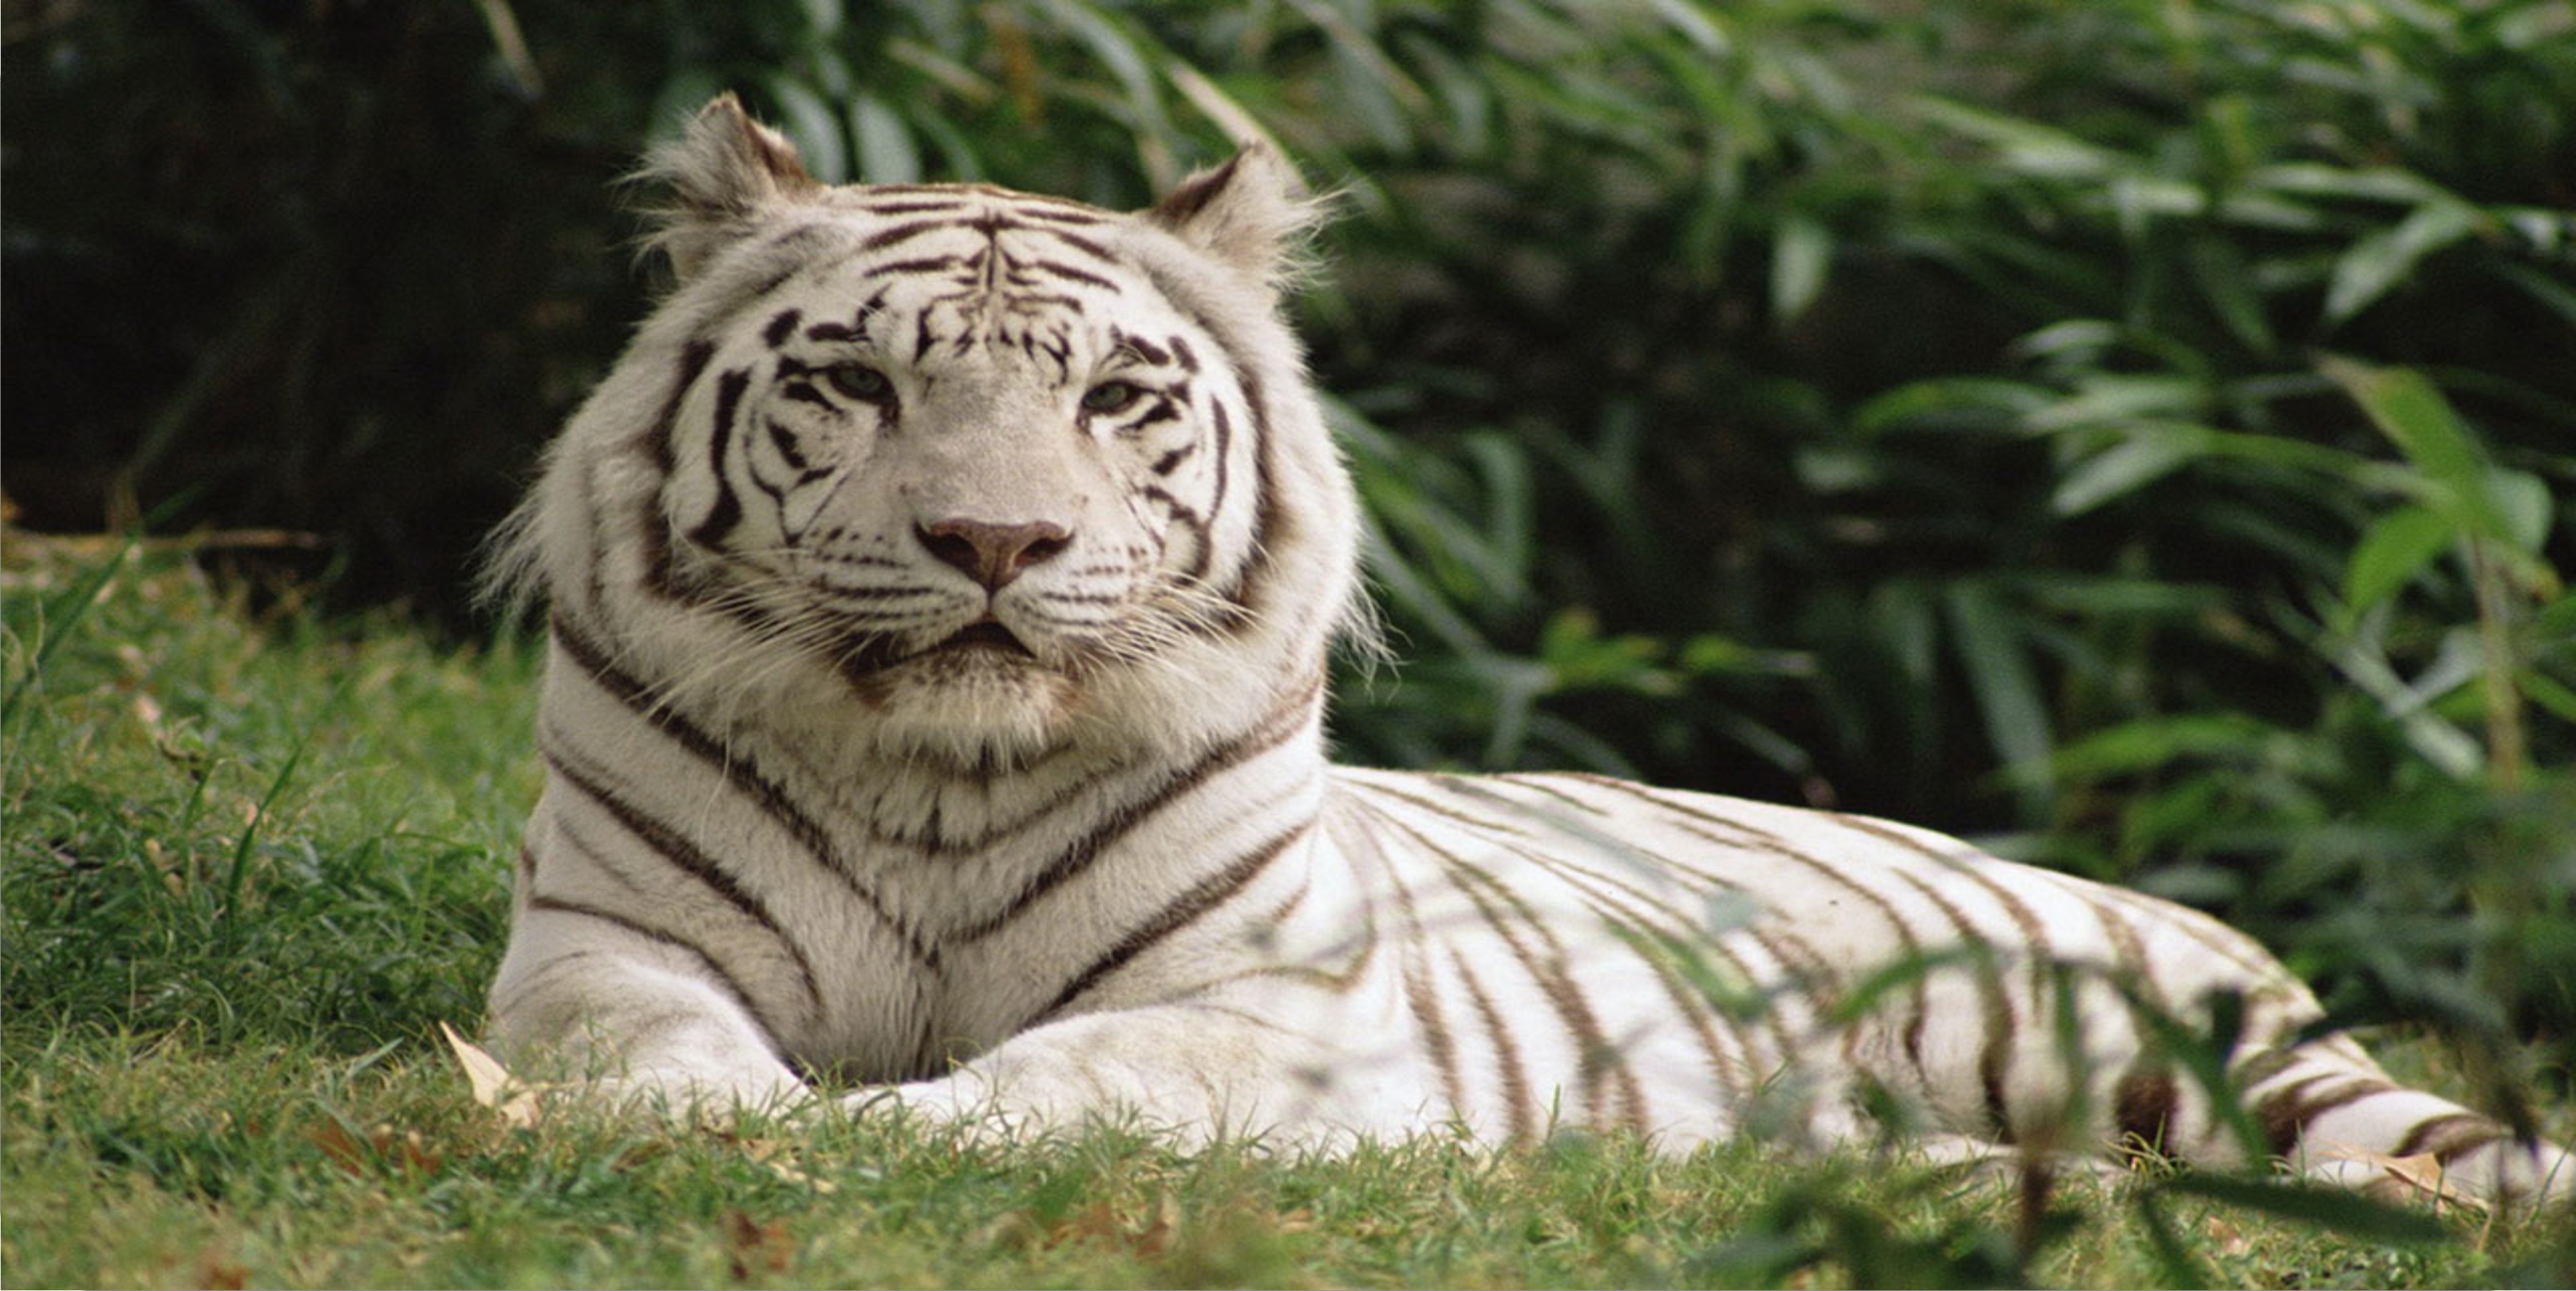 White Tiger In Grass Photo License Plate